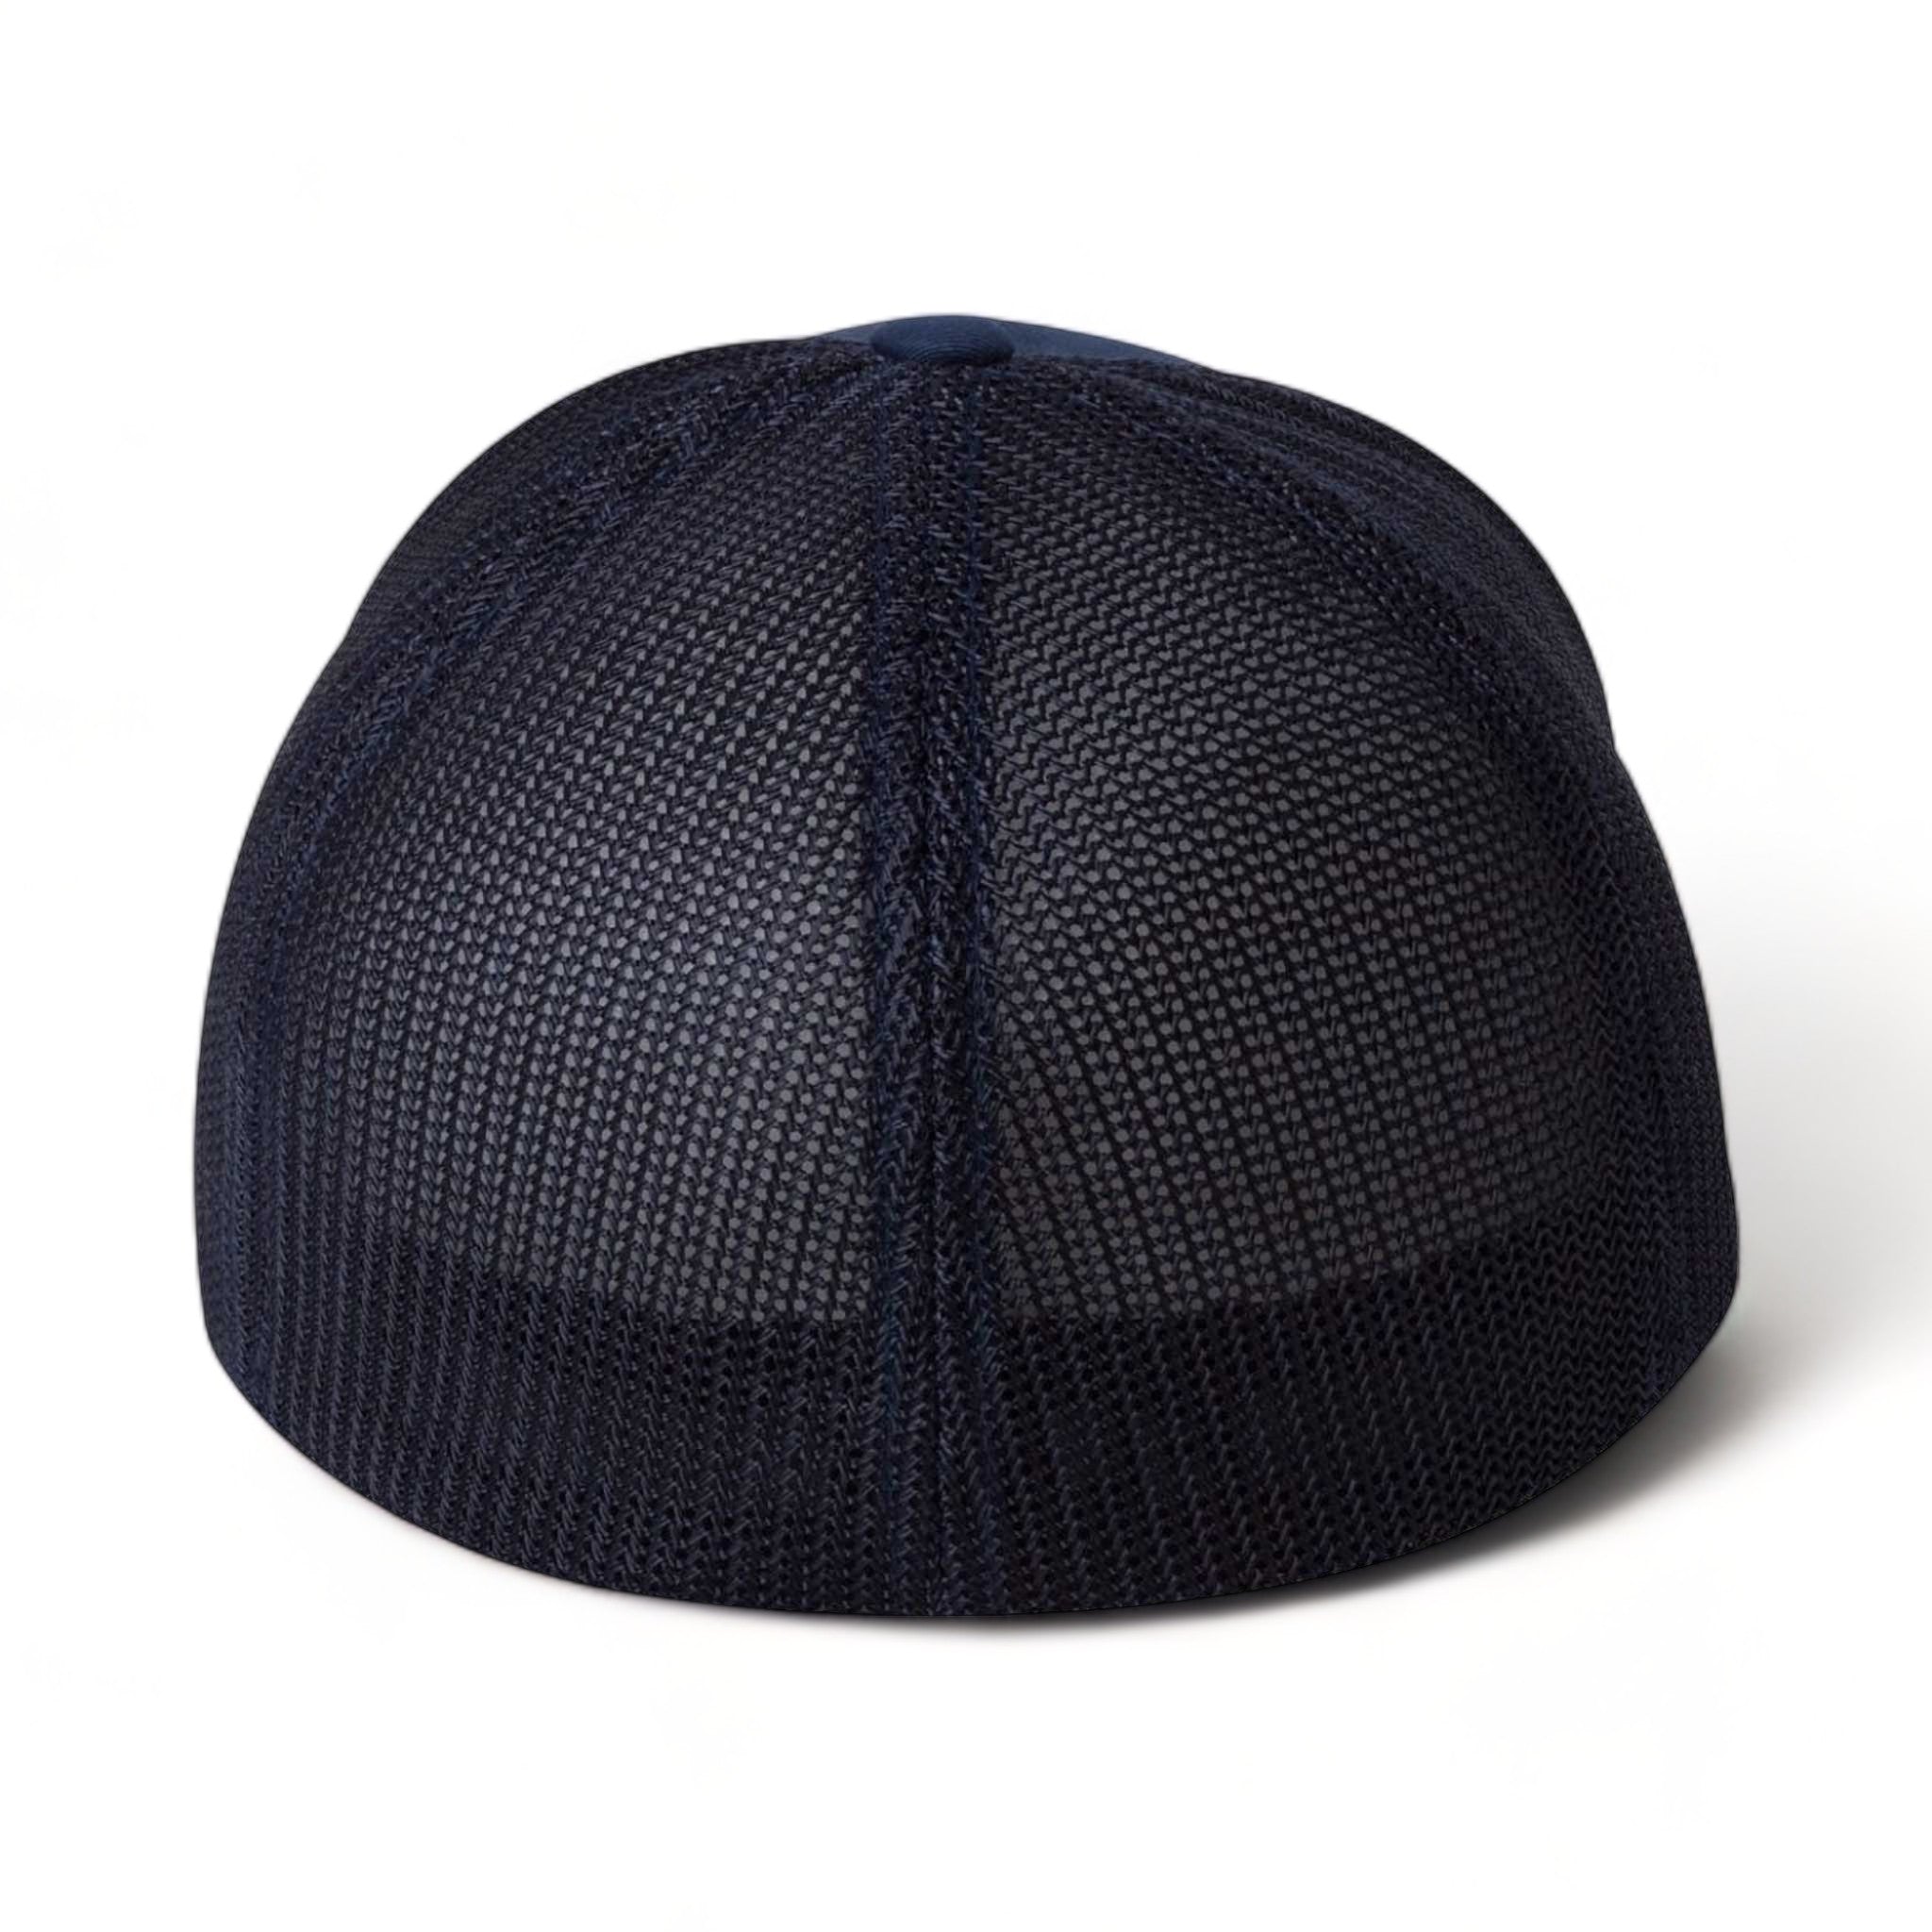 Back view of Flexfit 6511 custom hat in navy